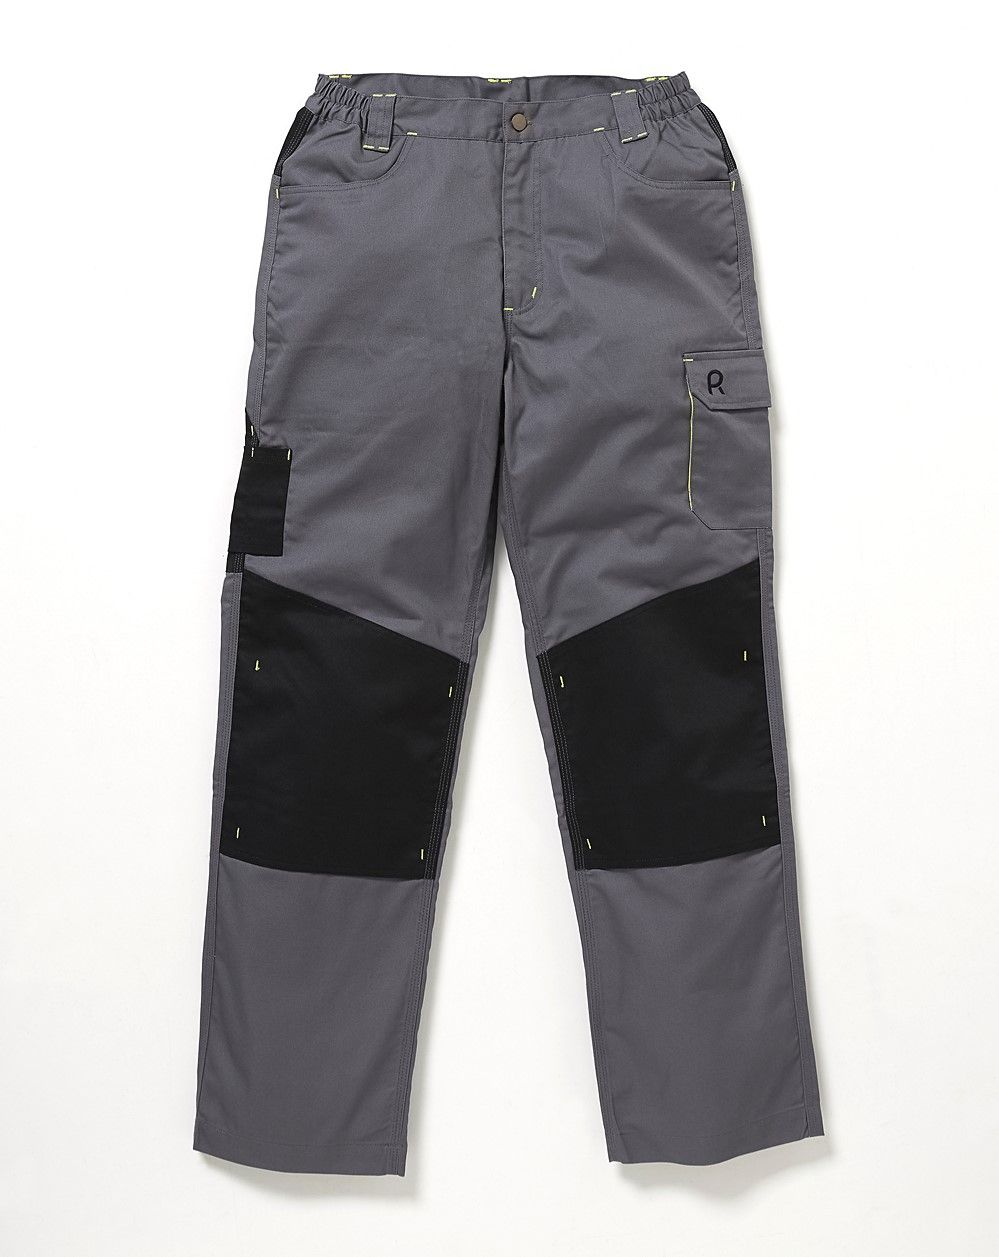 Pantalon de travail Graphite gris XXL